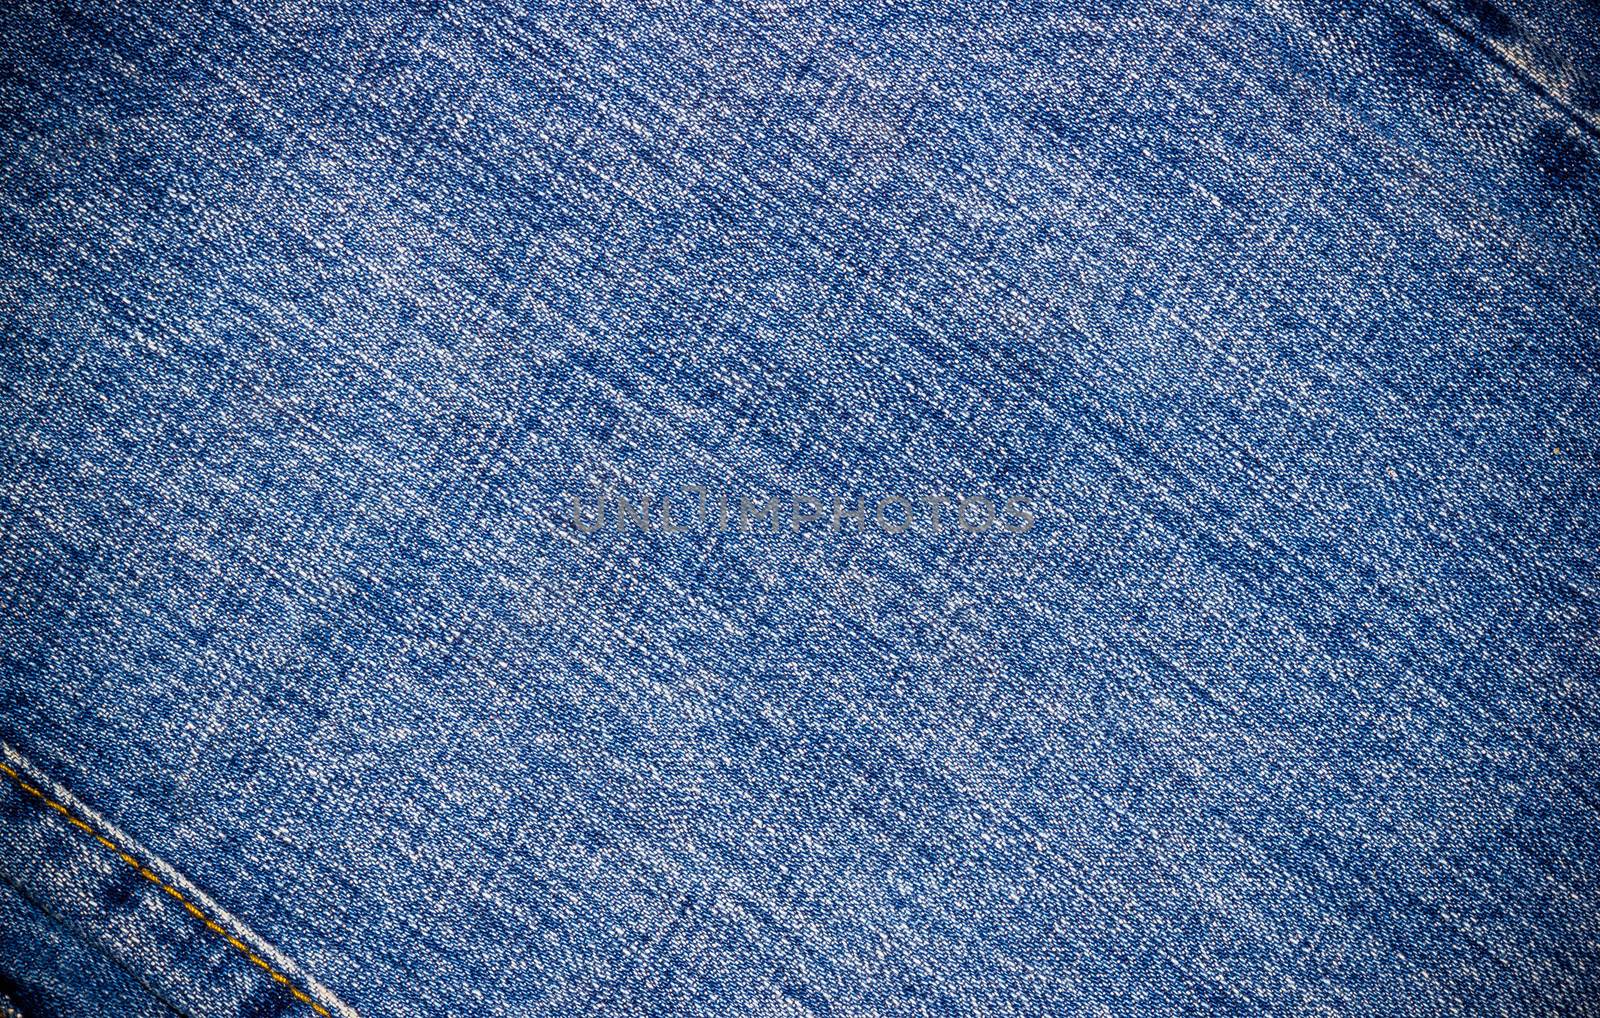 Blue jeans texture. by seksan44